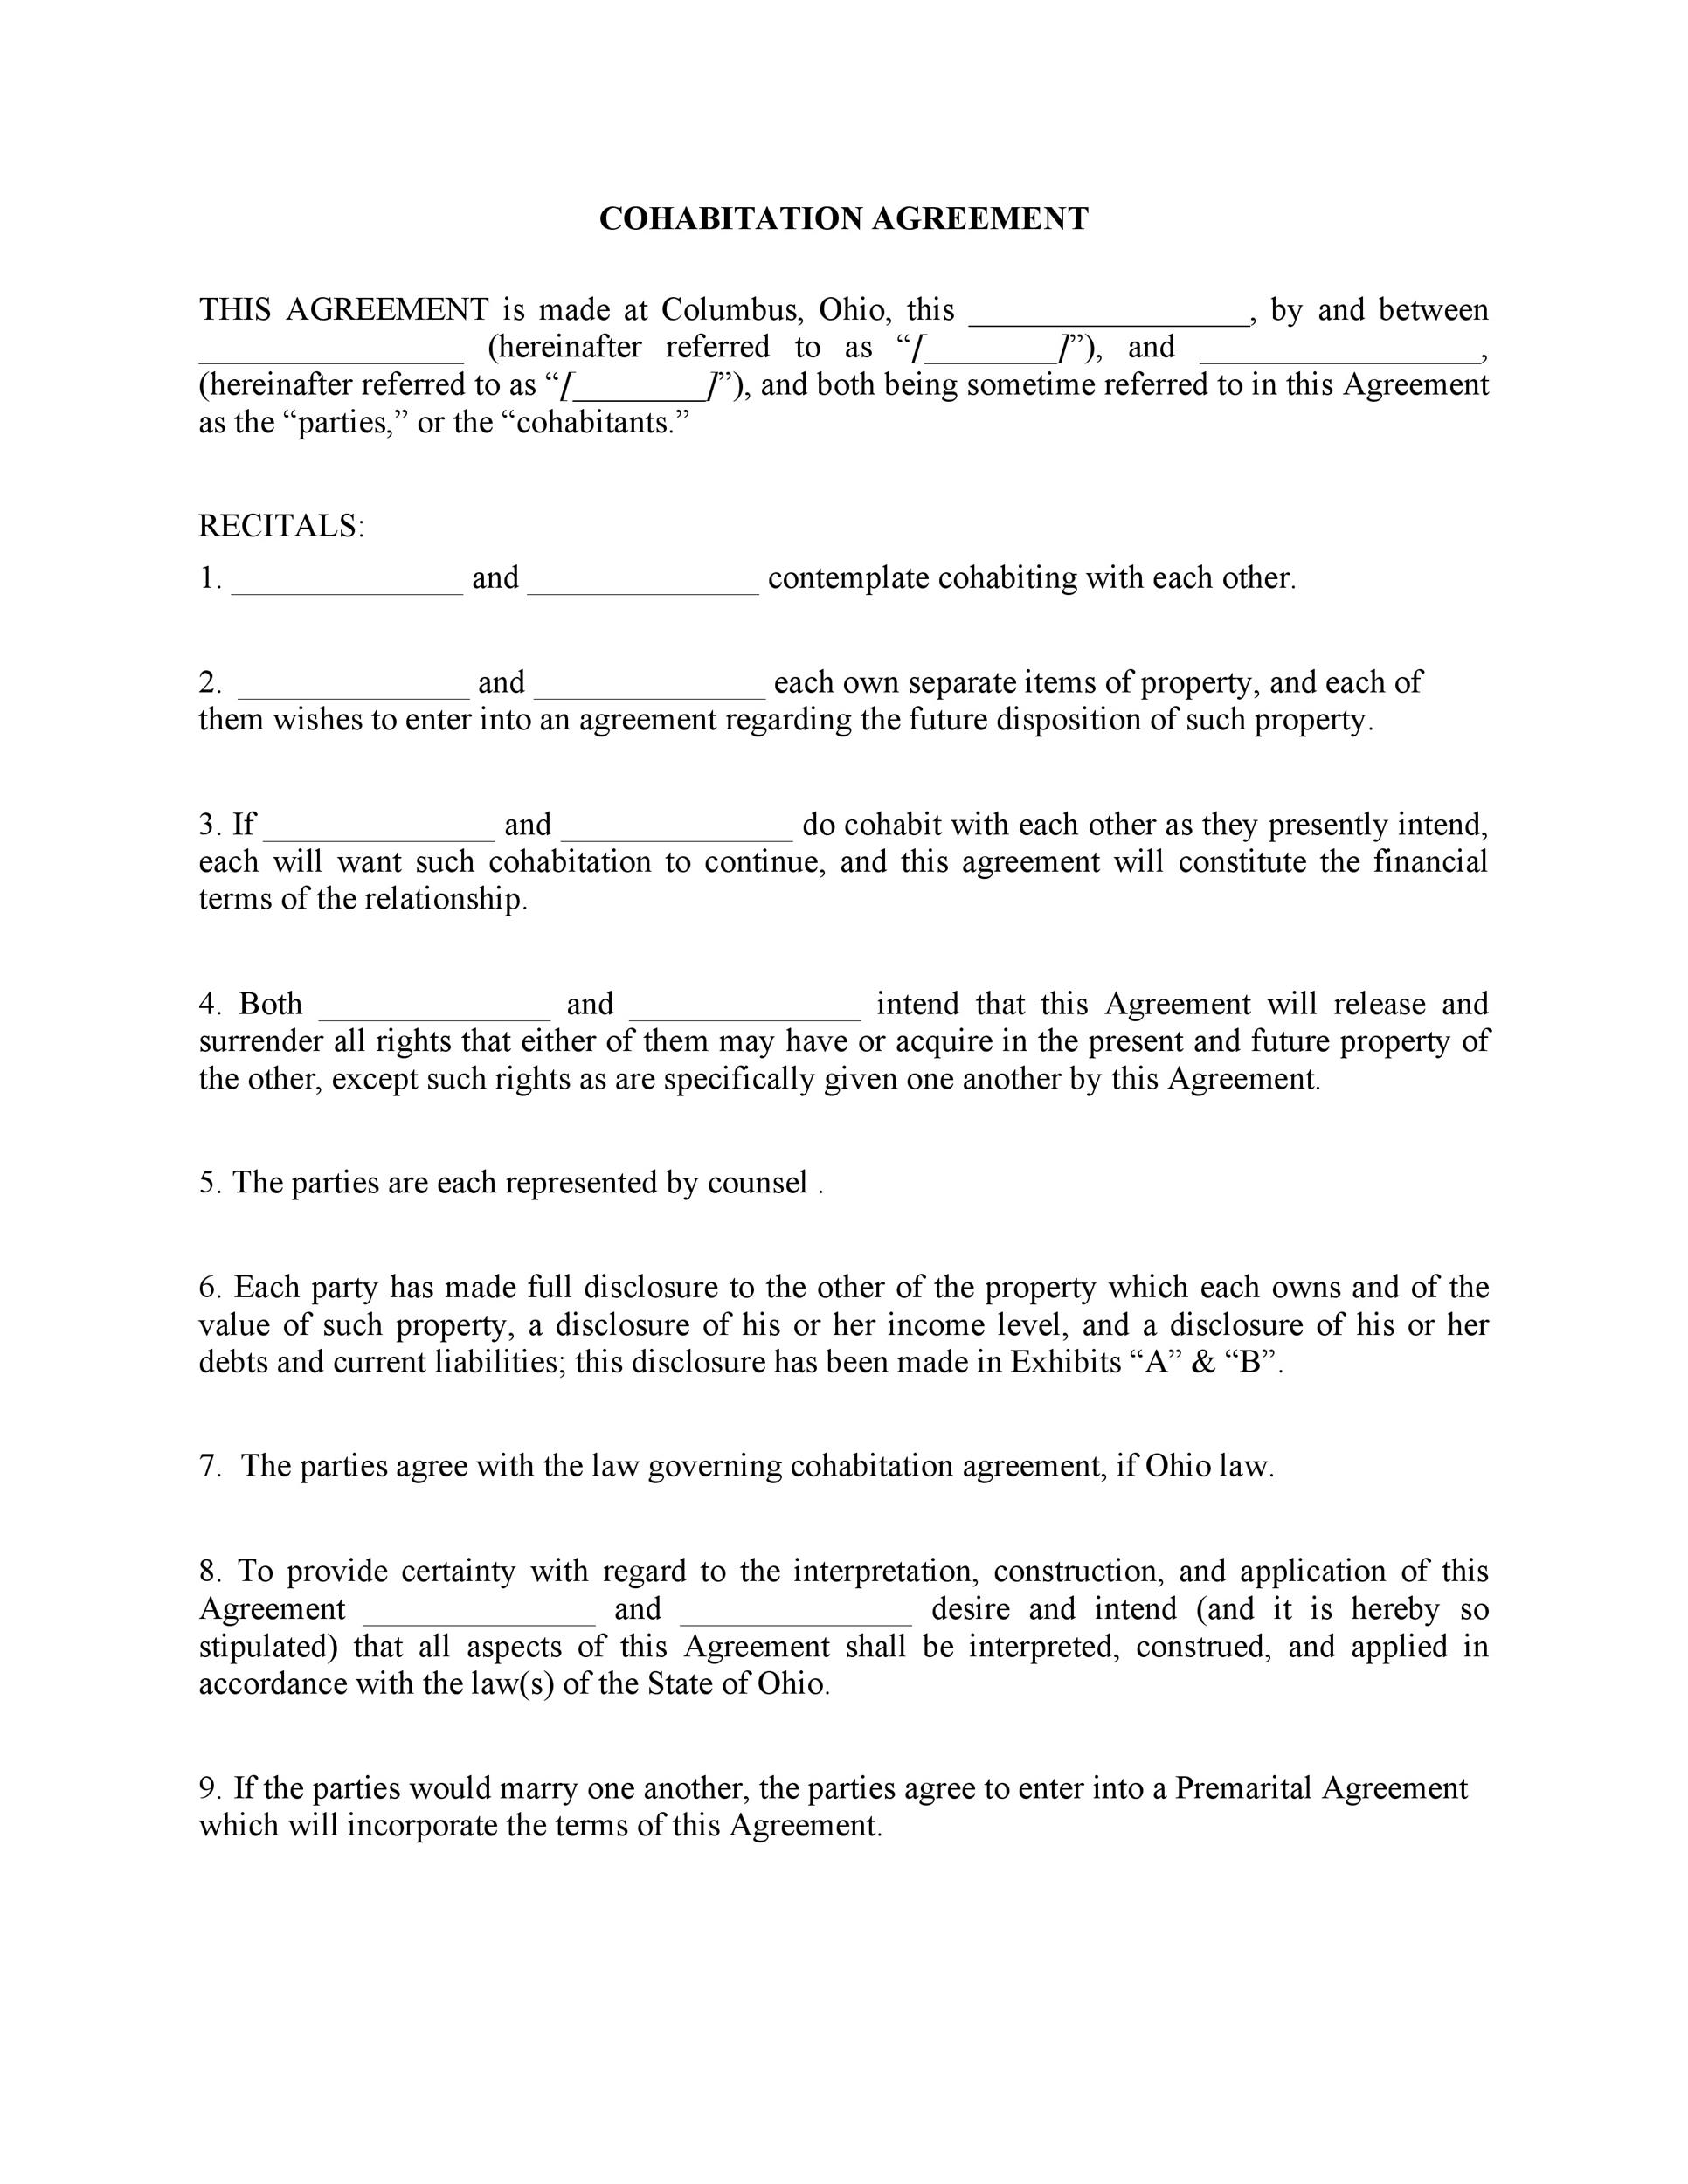 Free cohabitation agreement template 25